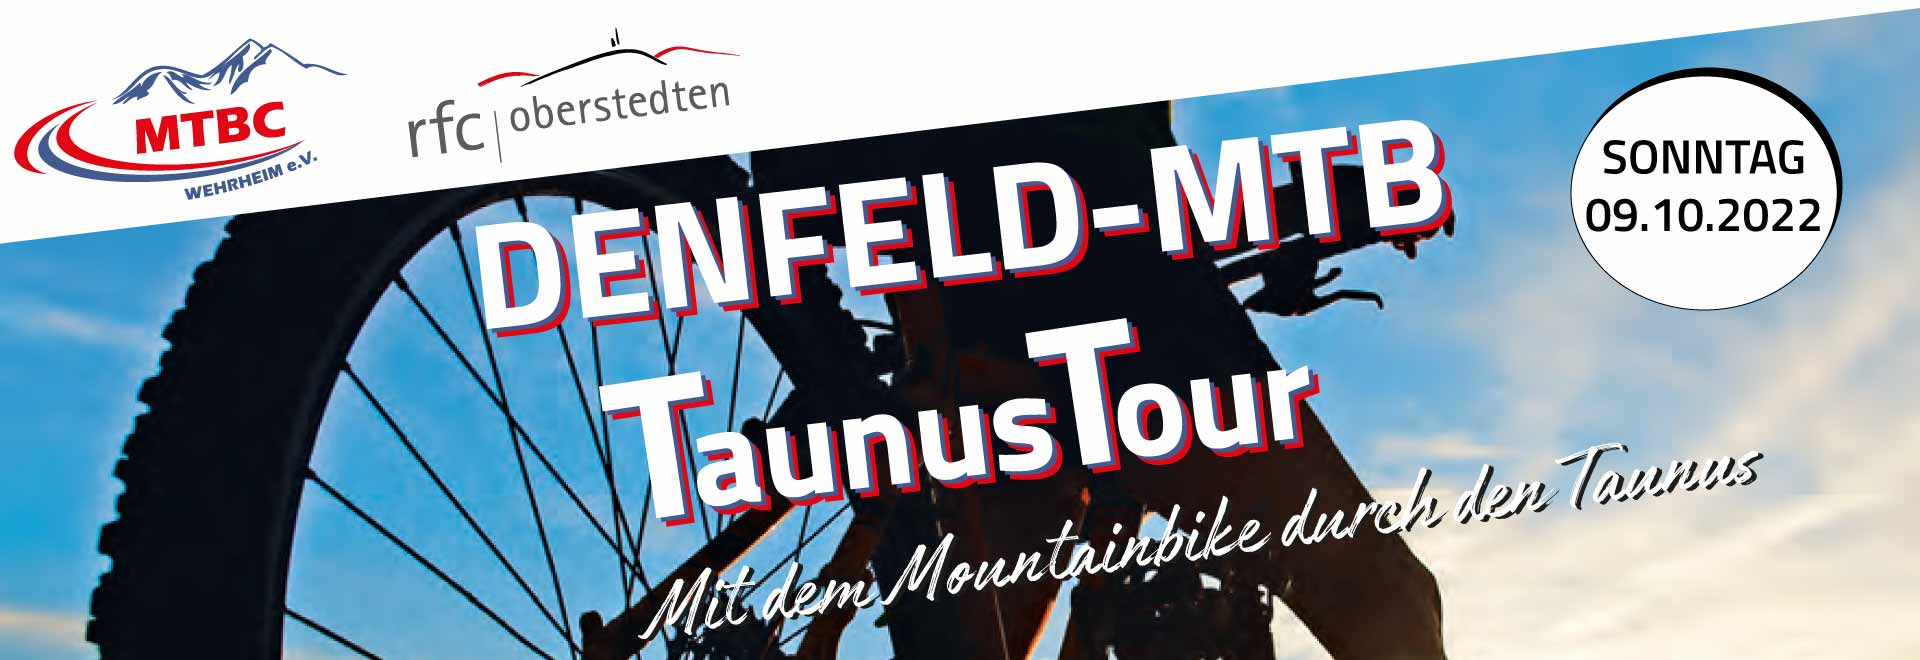 Country Touren Fahrt: DENFELD MTB Taunus-Tour 2022